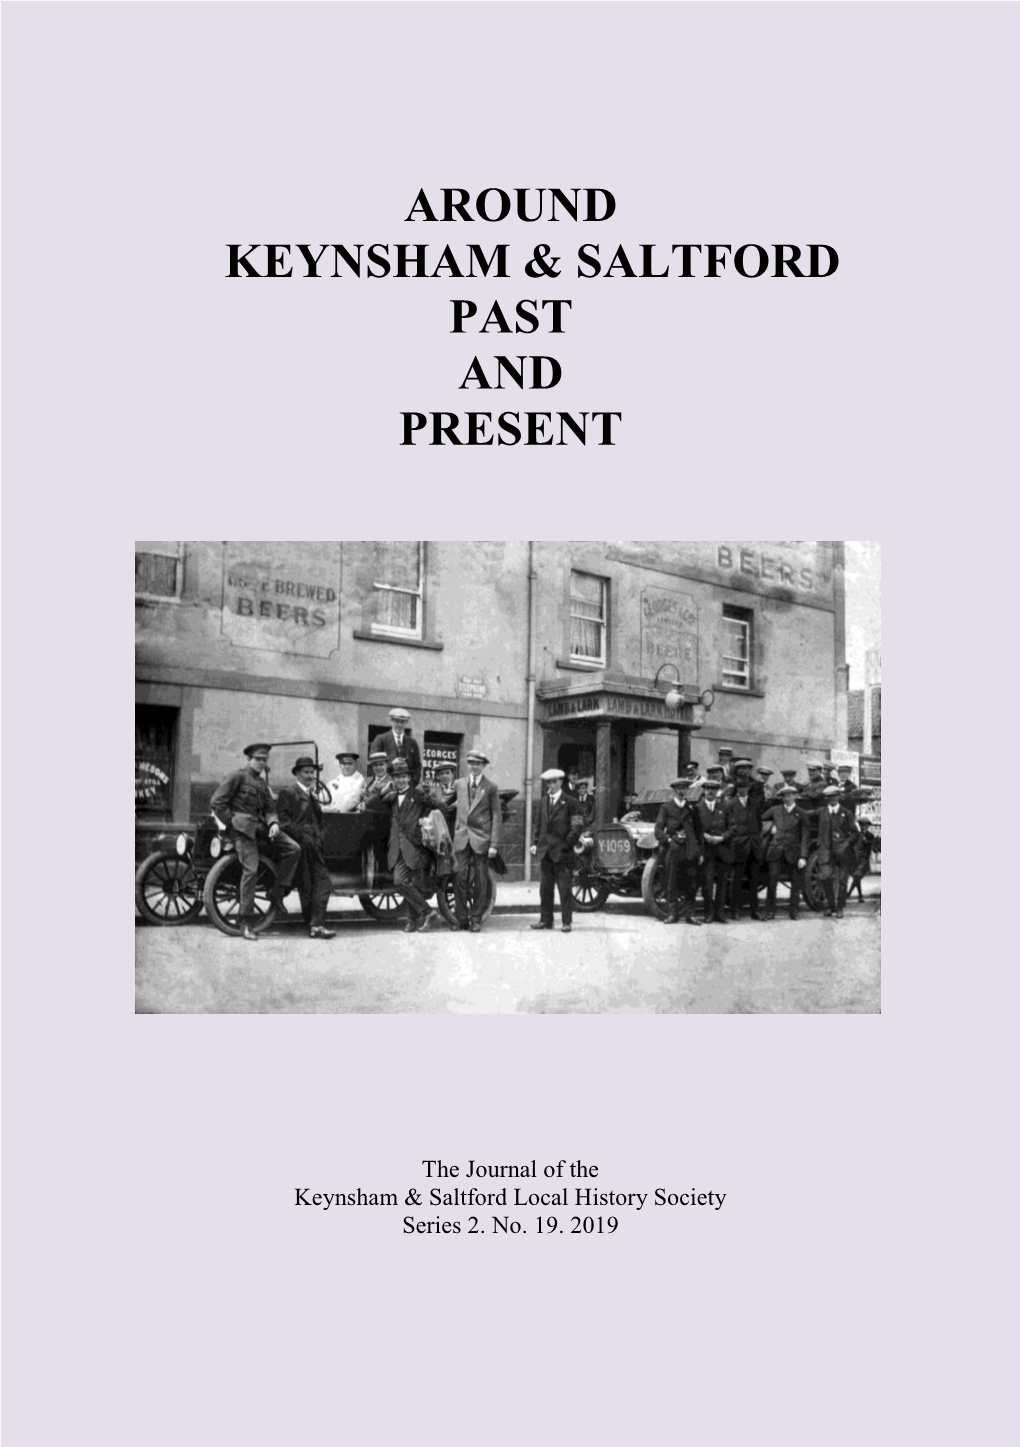 Around Keynsham & Saltford Past and Present